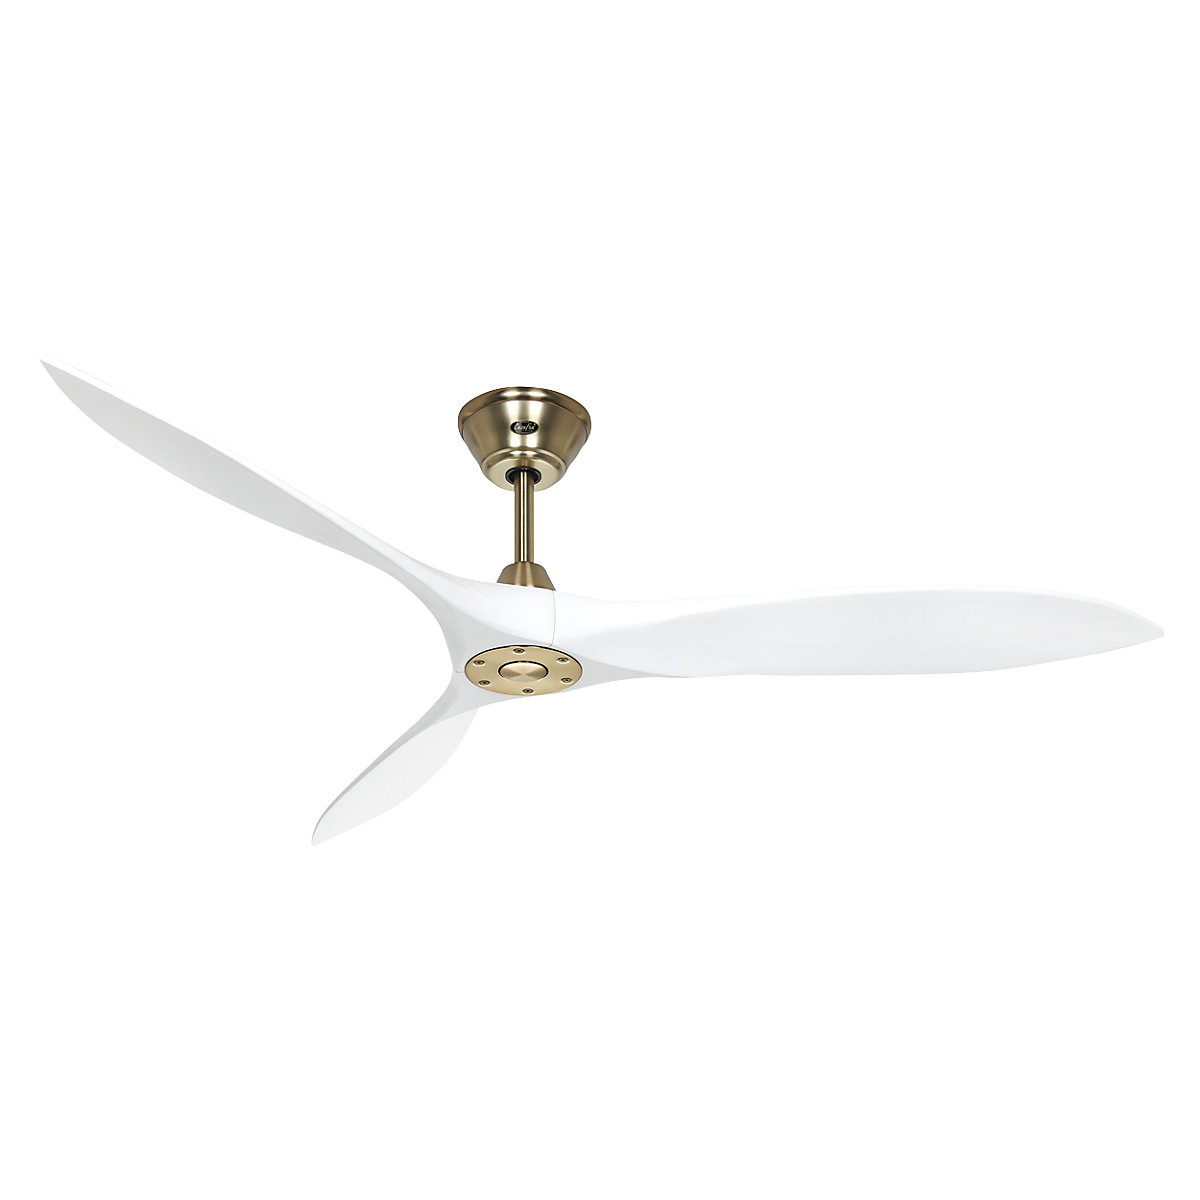 Plafondventilator ECO AIRSCREW, propellerblad-Ø 1520 mm, matwit / messing